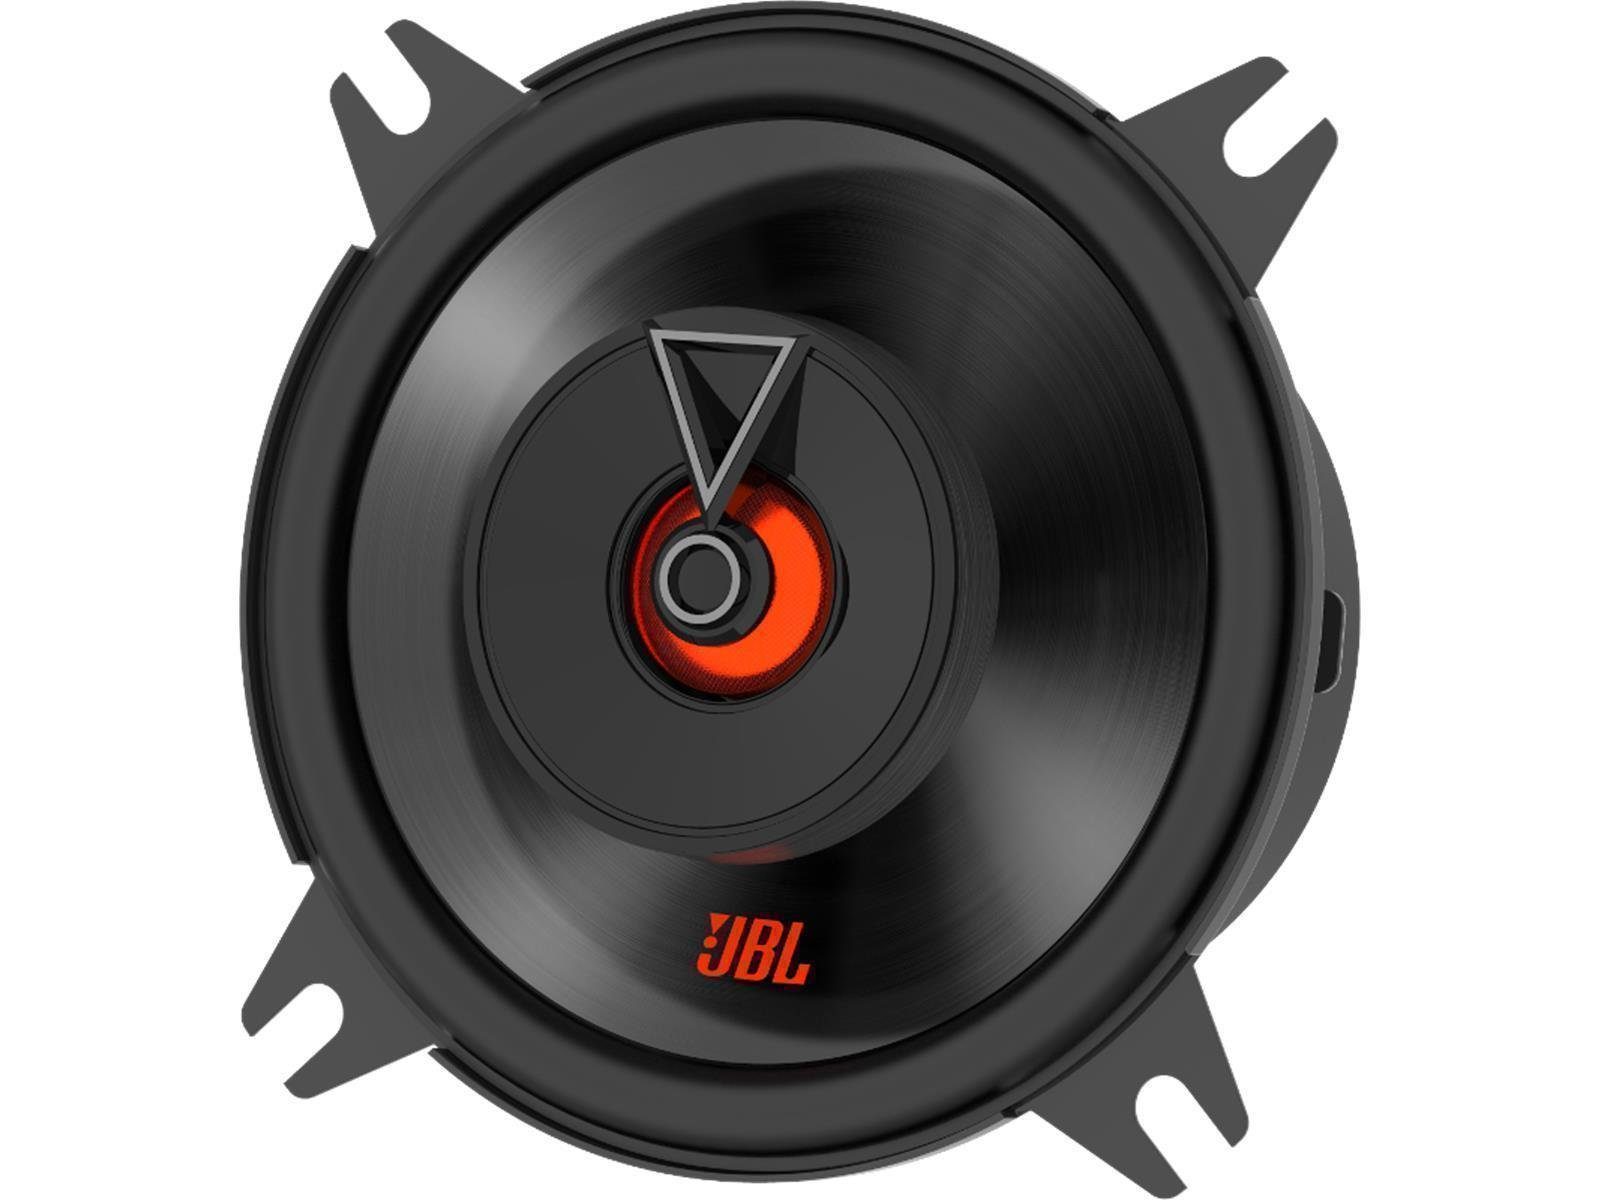 JBL JBL passend für Armaturenbrett 1992-98 Vento Auto-Lautsprecher Lautsprecher VW Set